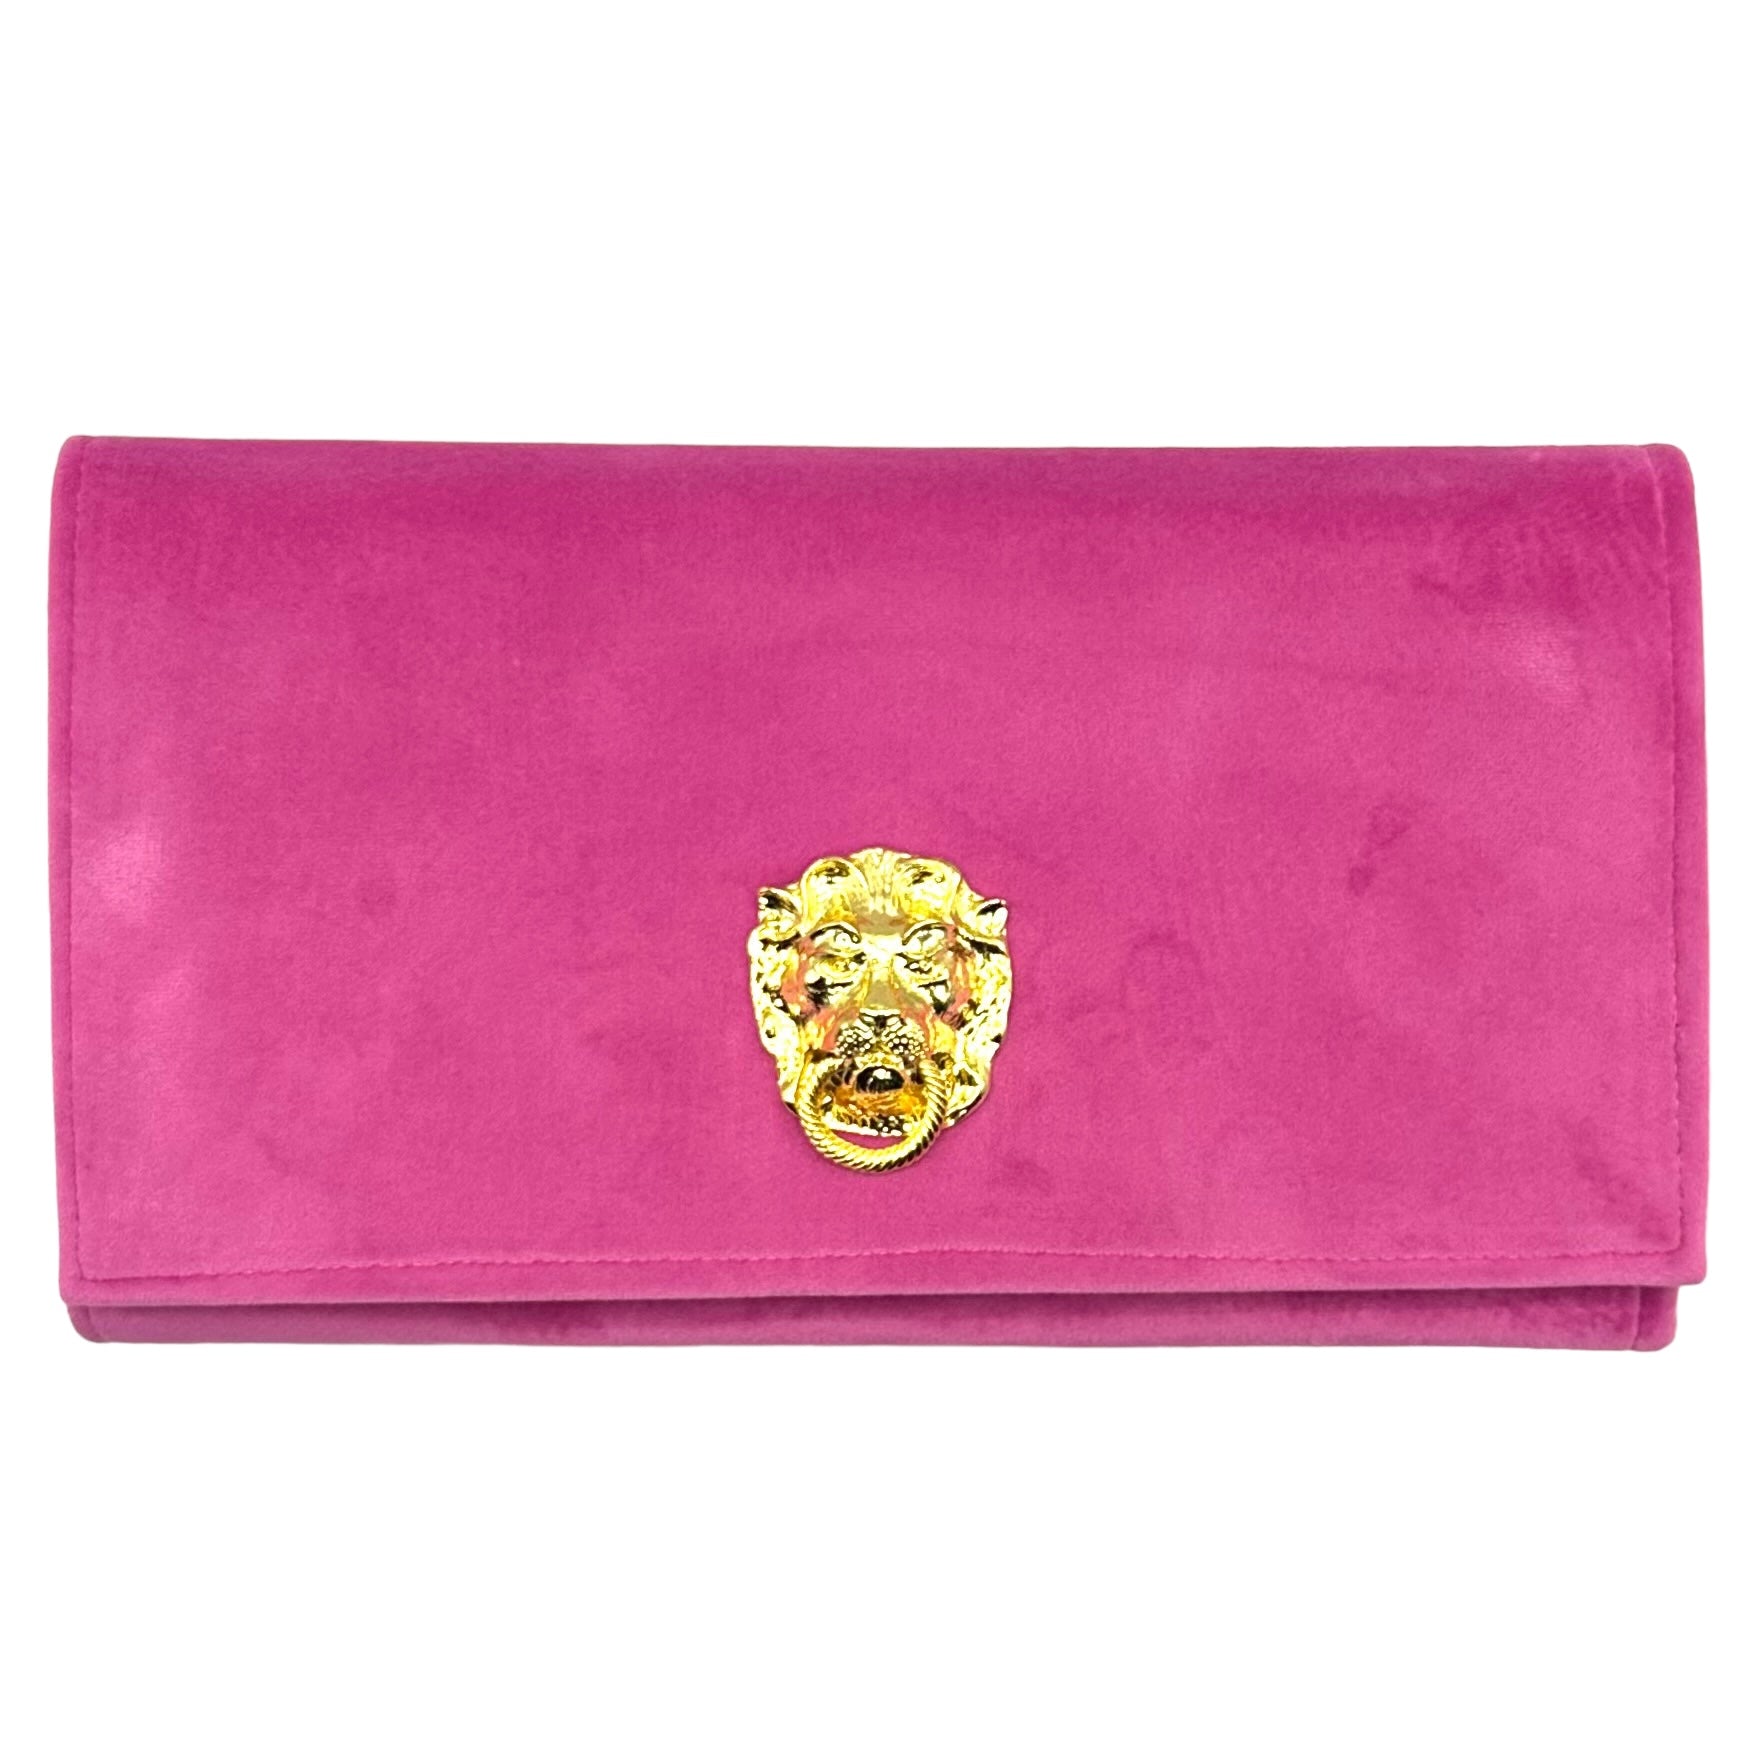 Golden Lion Head Purse Handbag Clutch Crossbody Shoulder Evening Bag -  Women's handbags